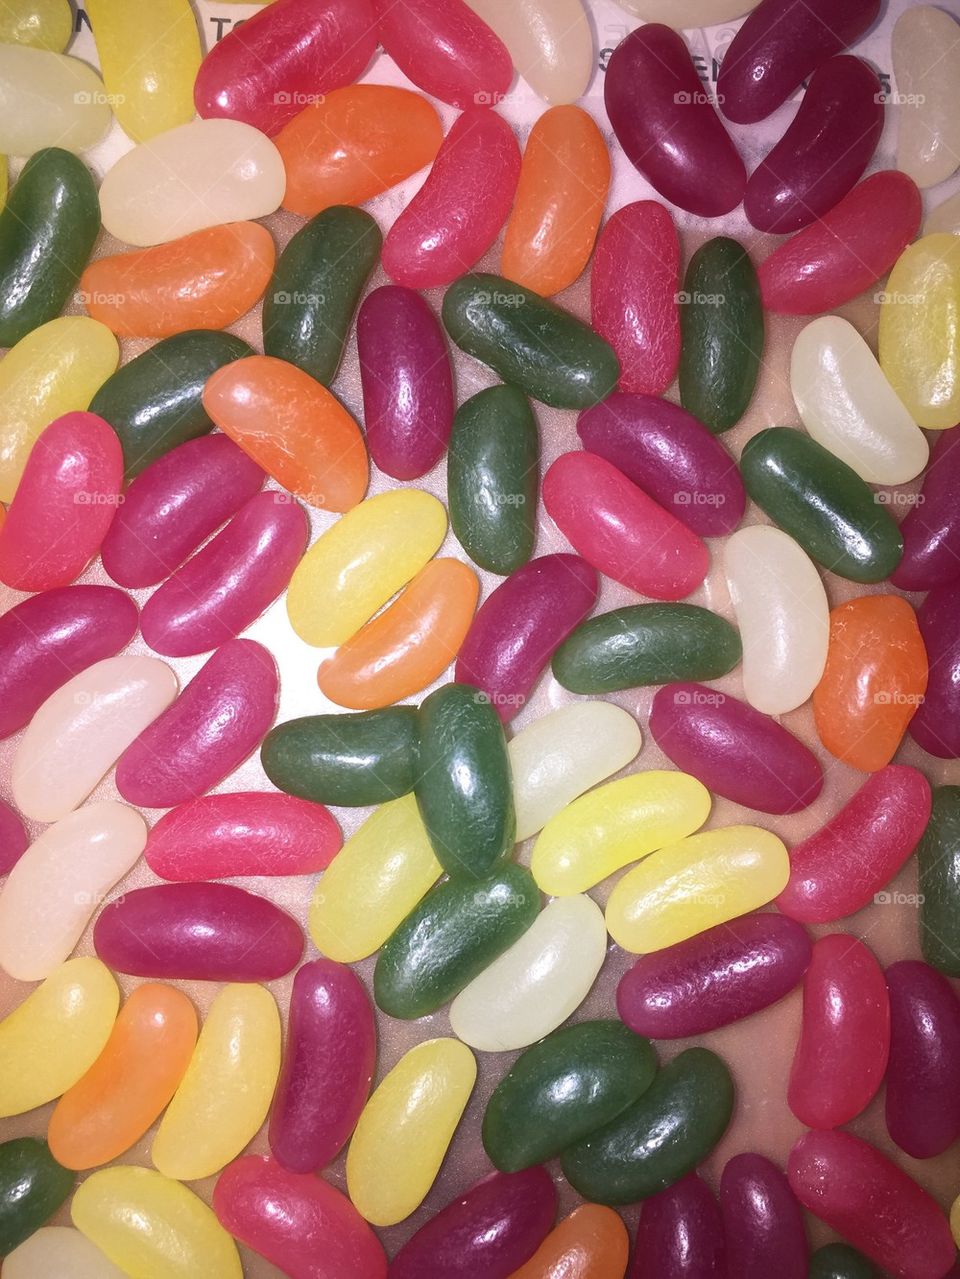 Jellybean 